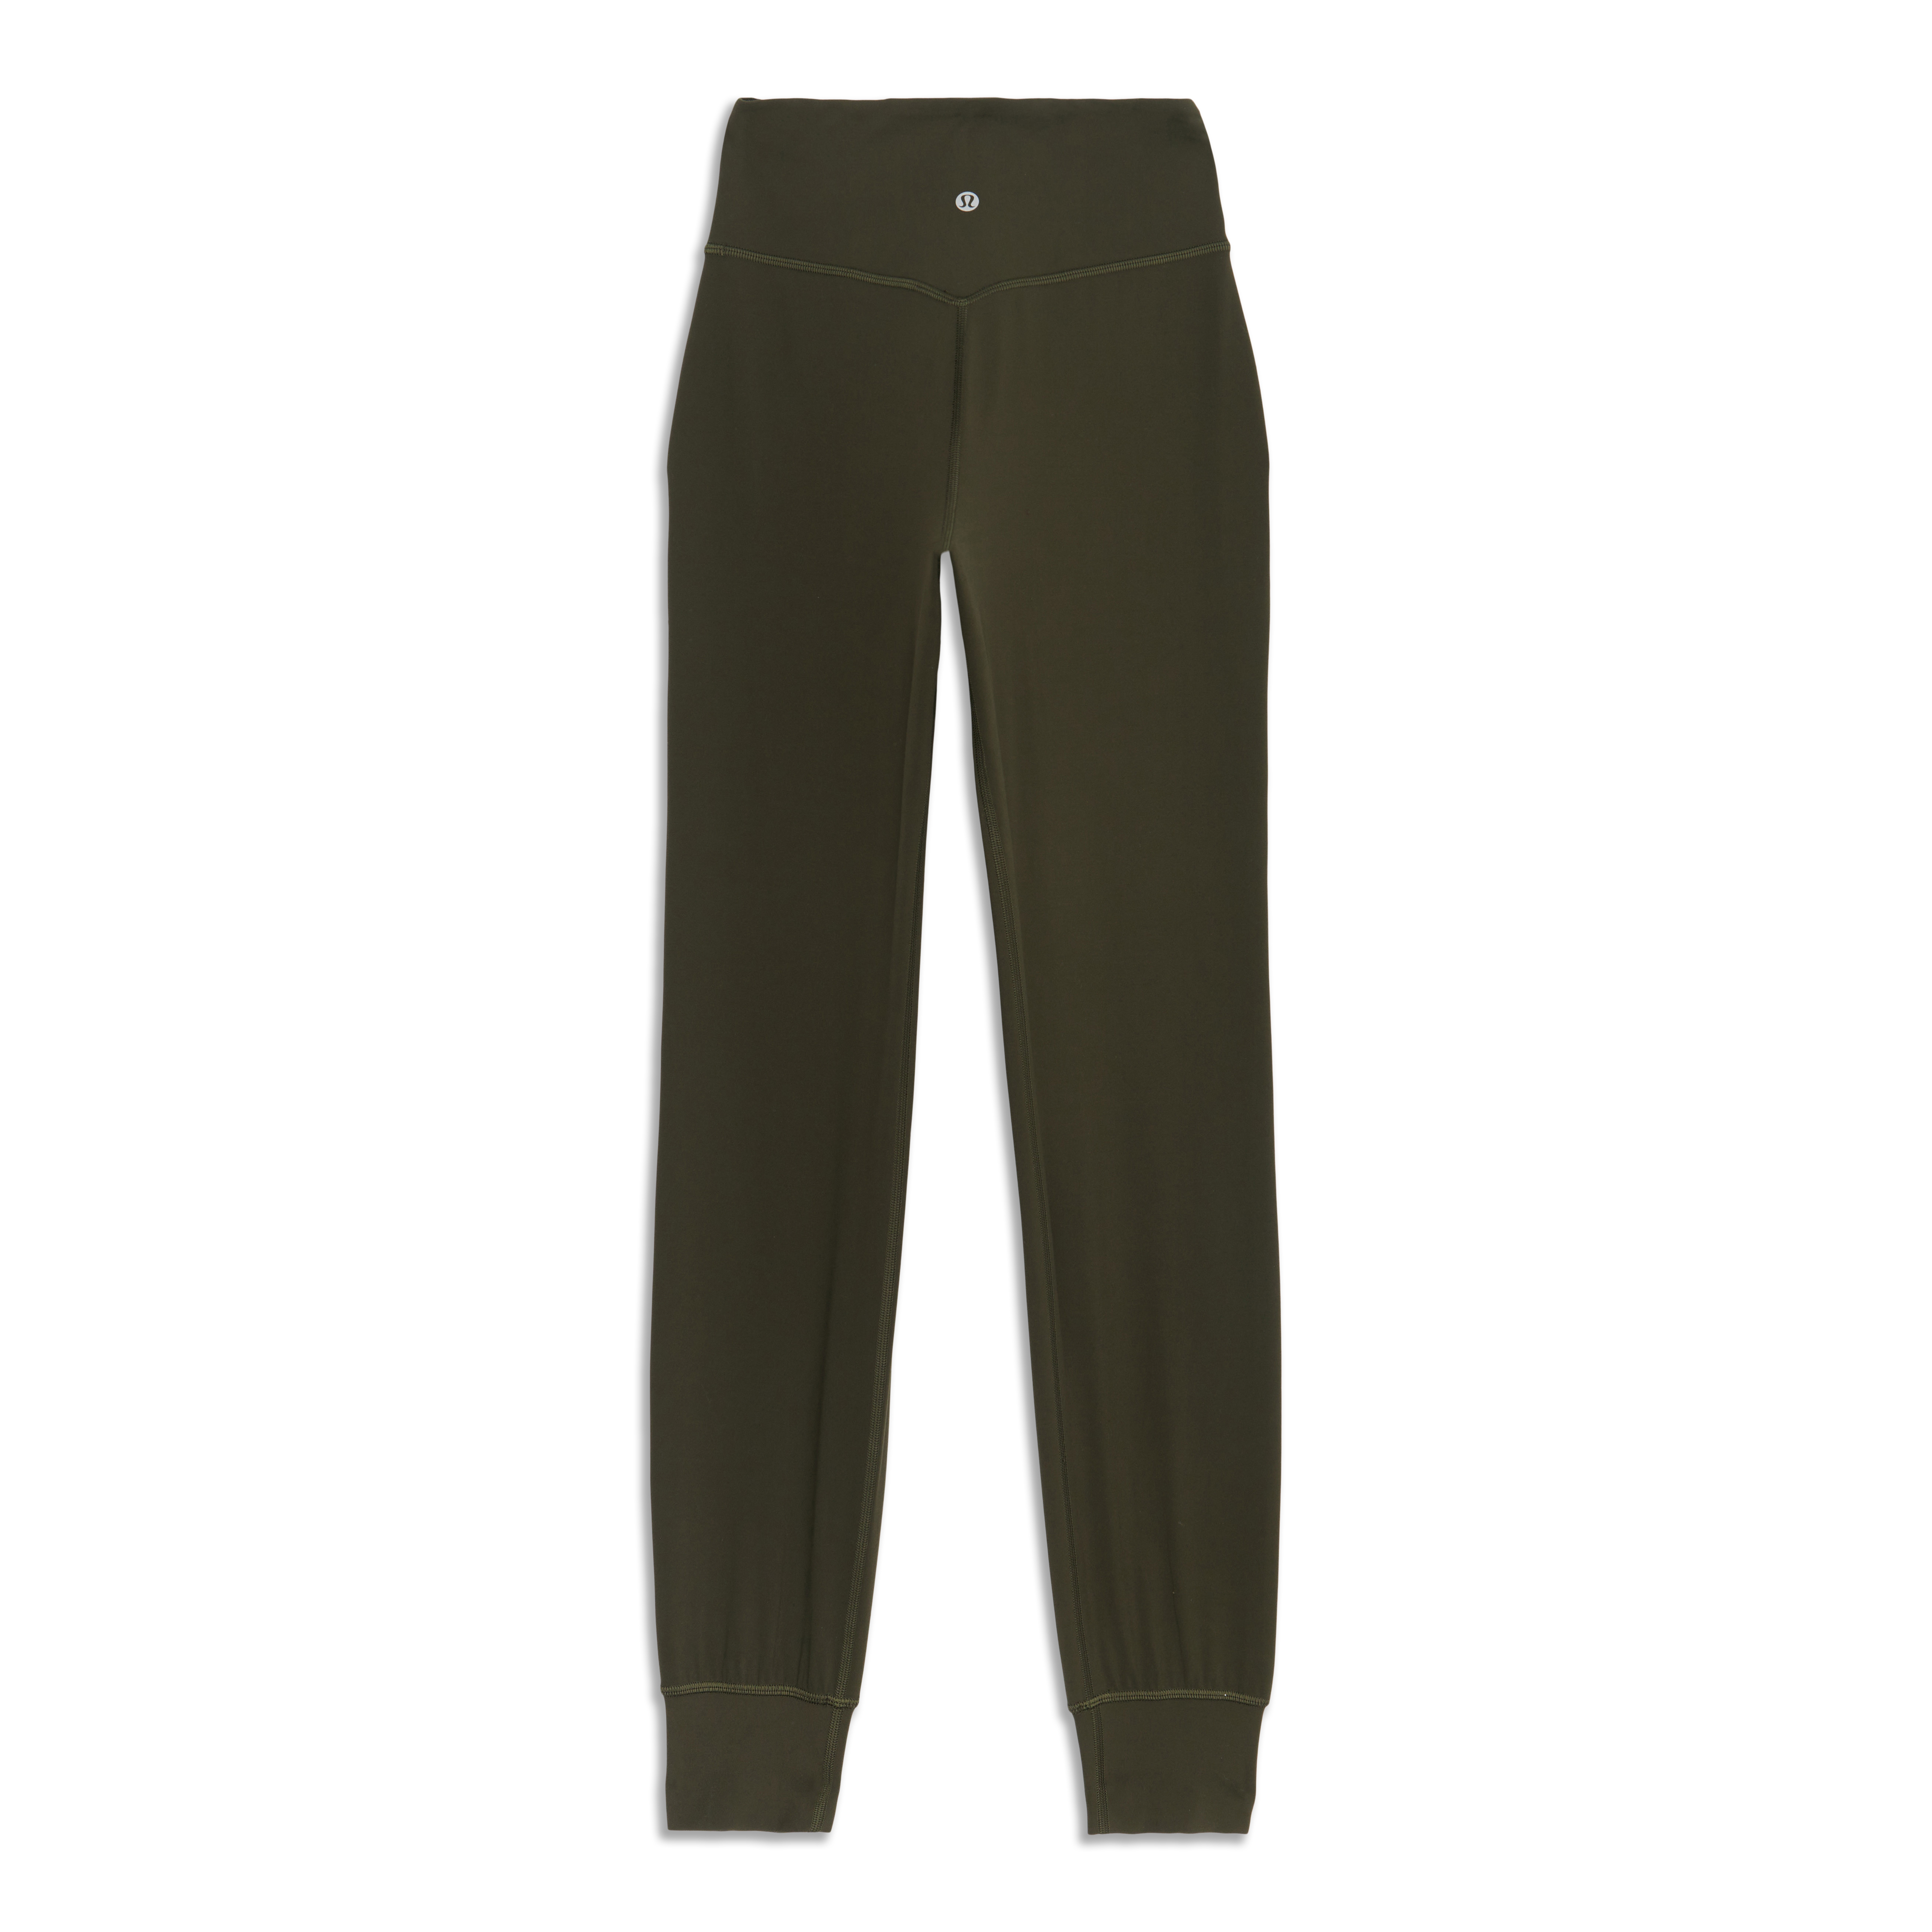 Lululemon Align Joggers Black Size 4 - $75 (36% Off Retail) - From Lauren